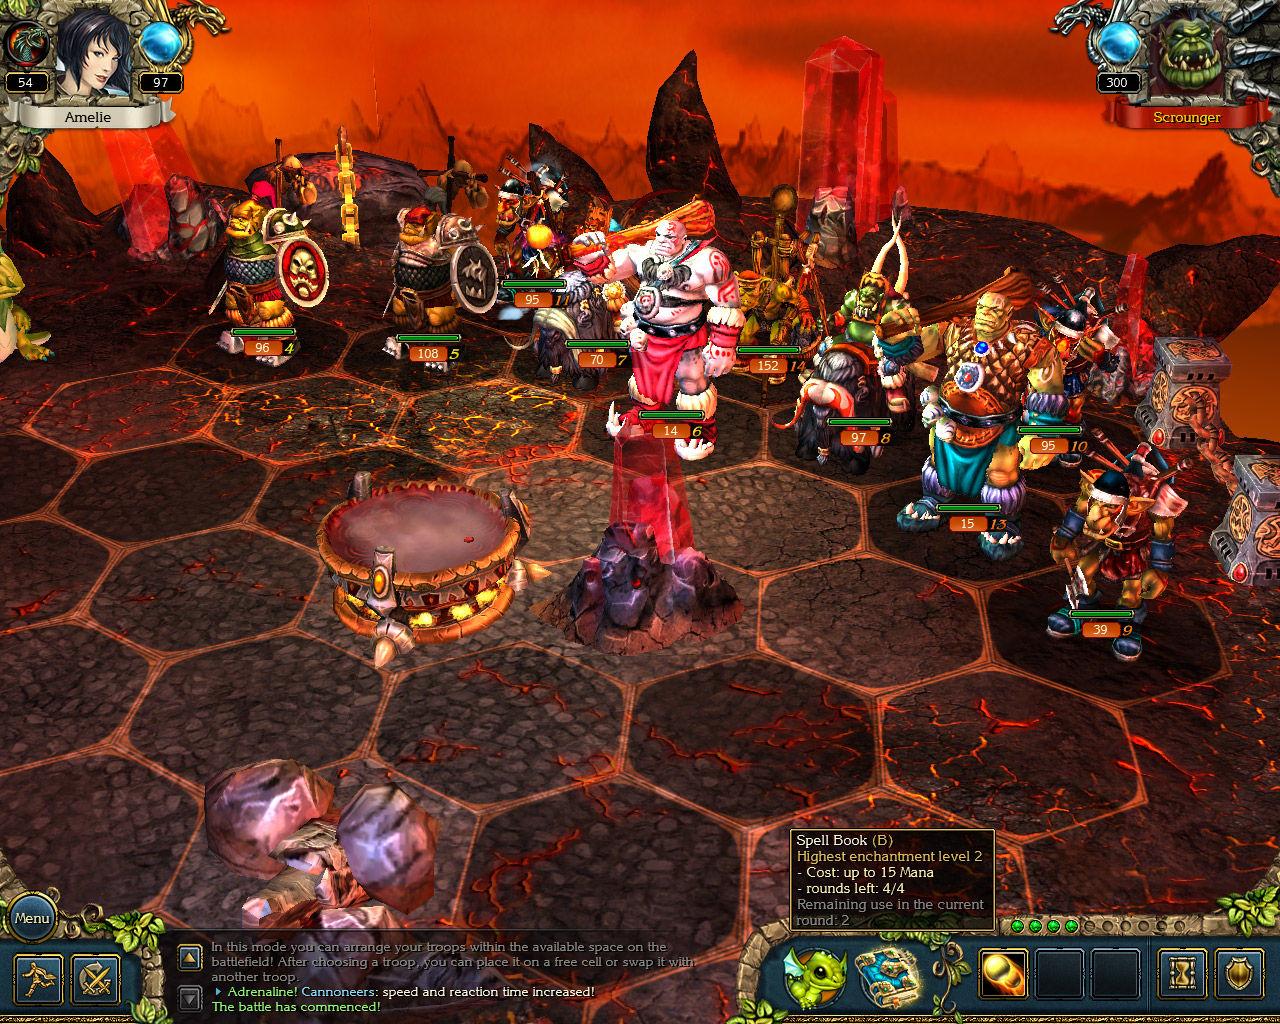 Screenshot №4 from game King's Bounty: Crossworlds